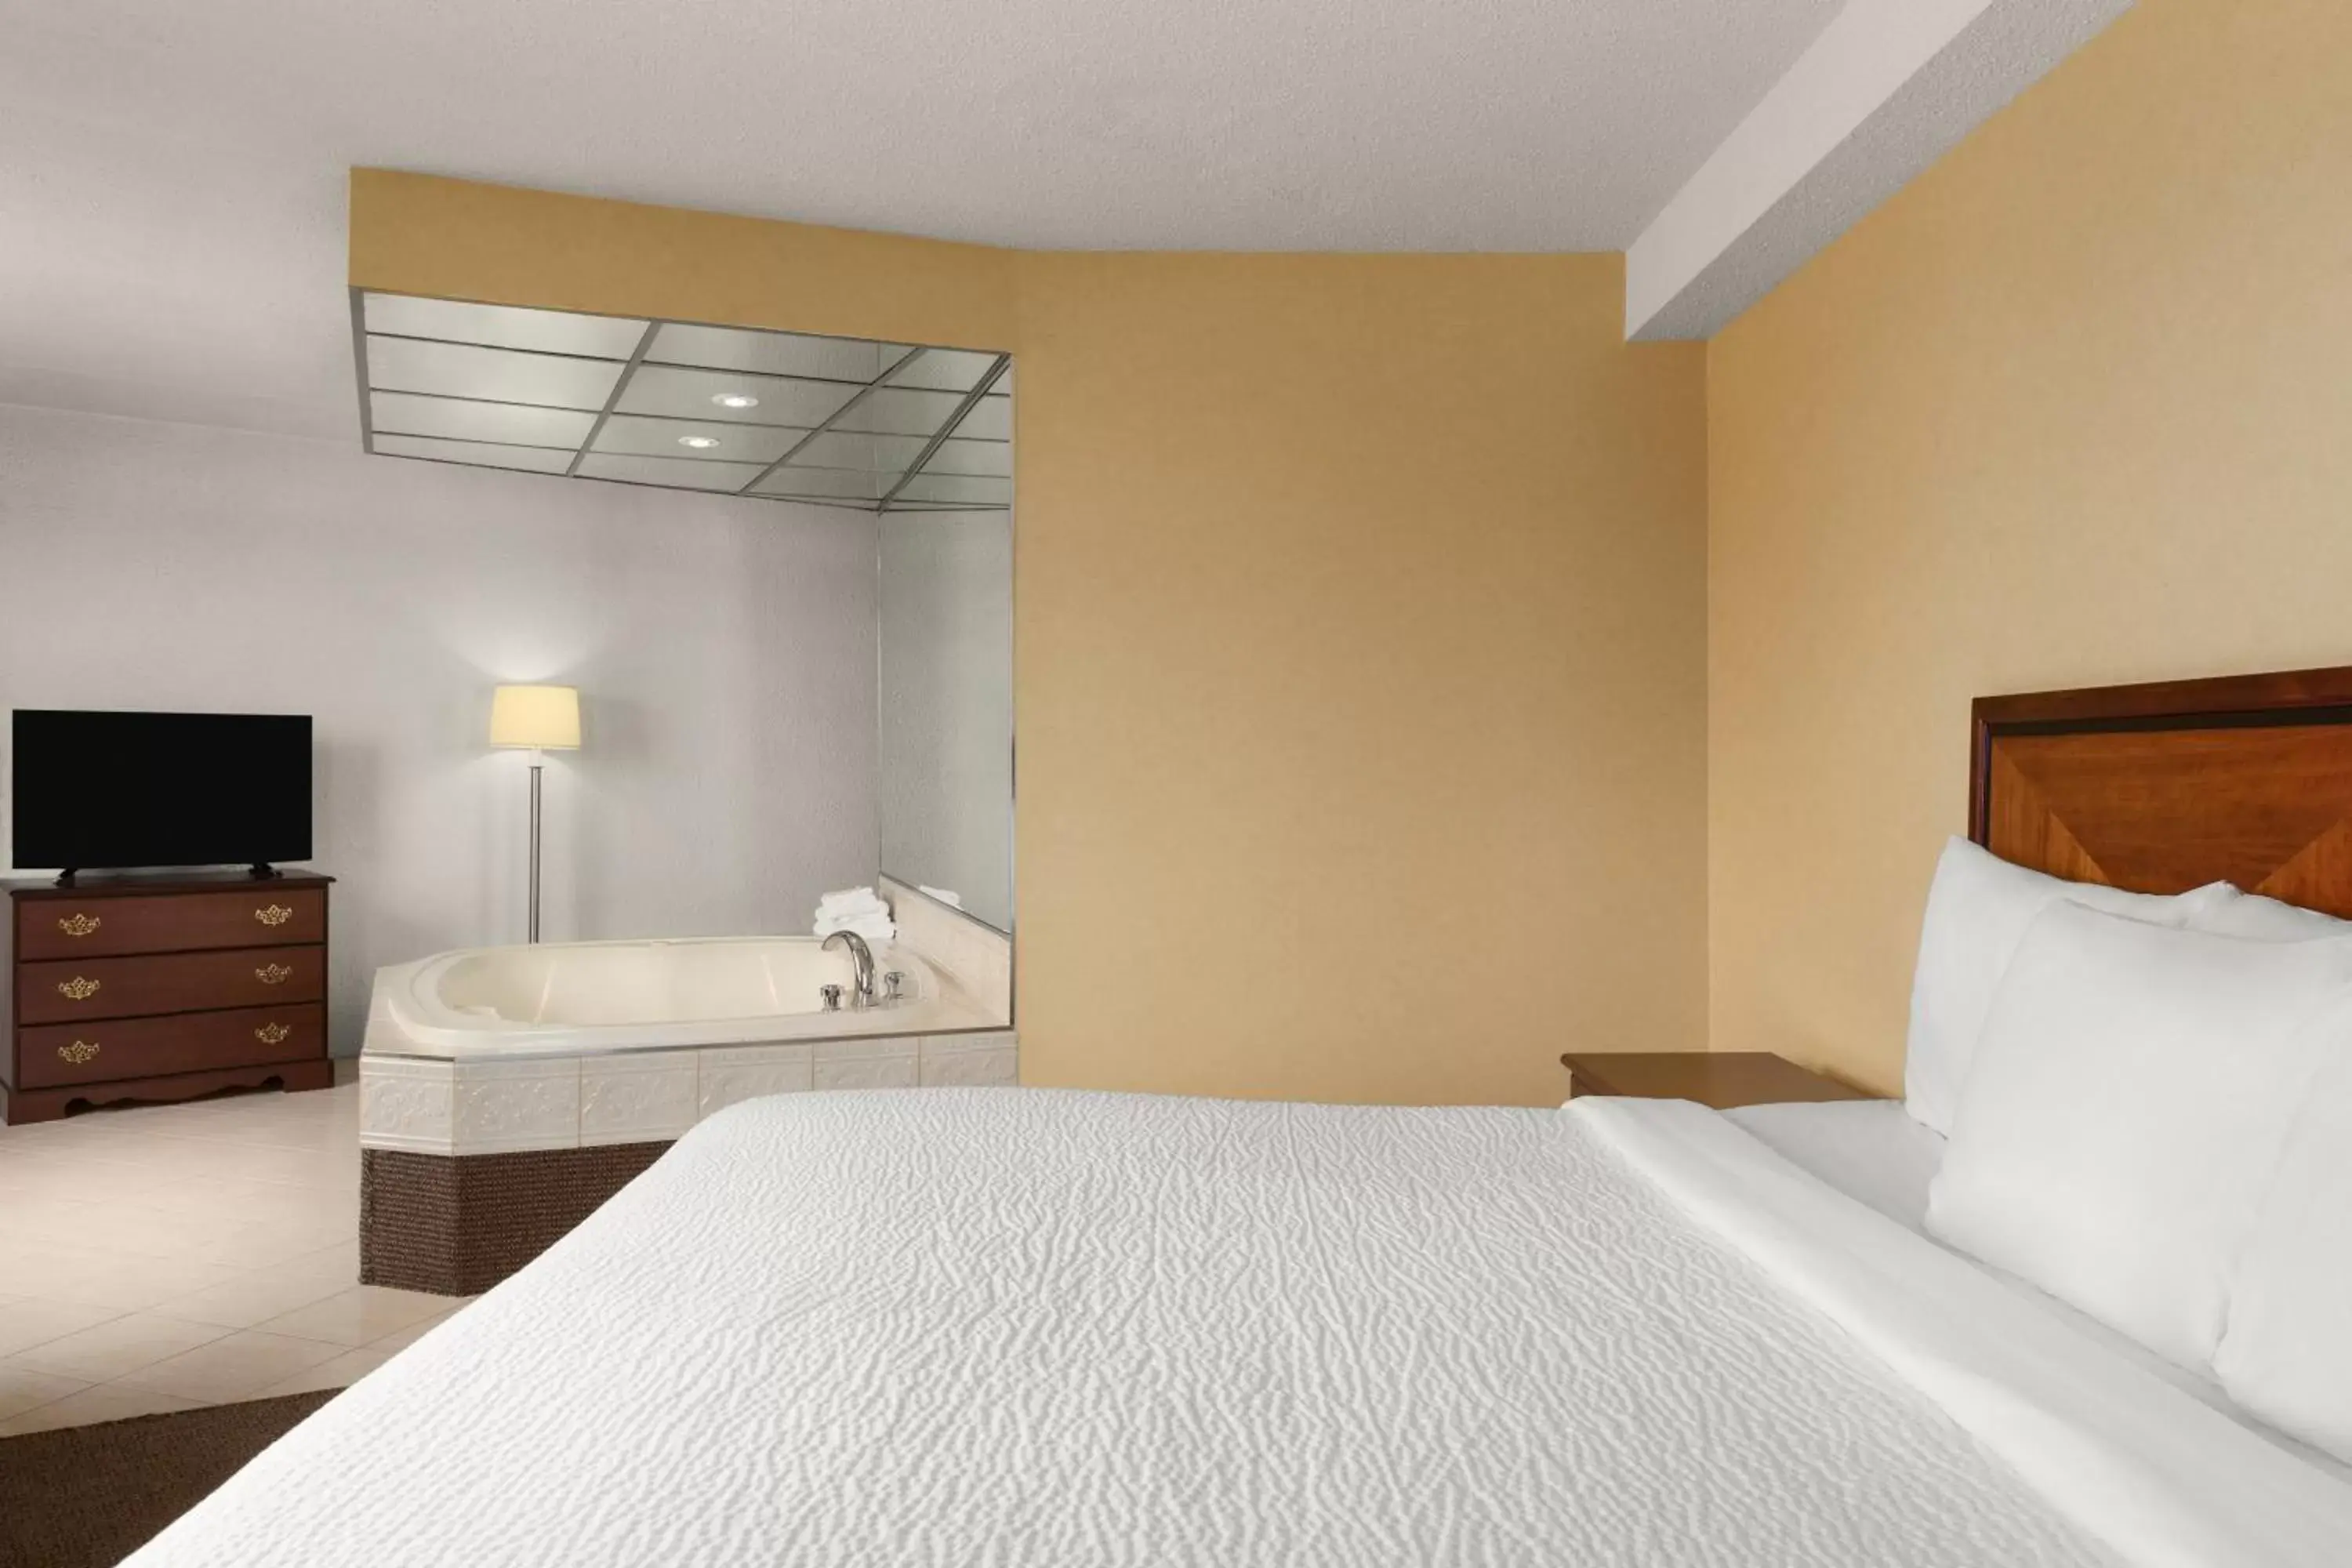 Bedroom, Room Photo in Days Inn by Wyndham Fallsview